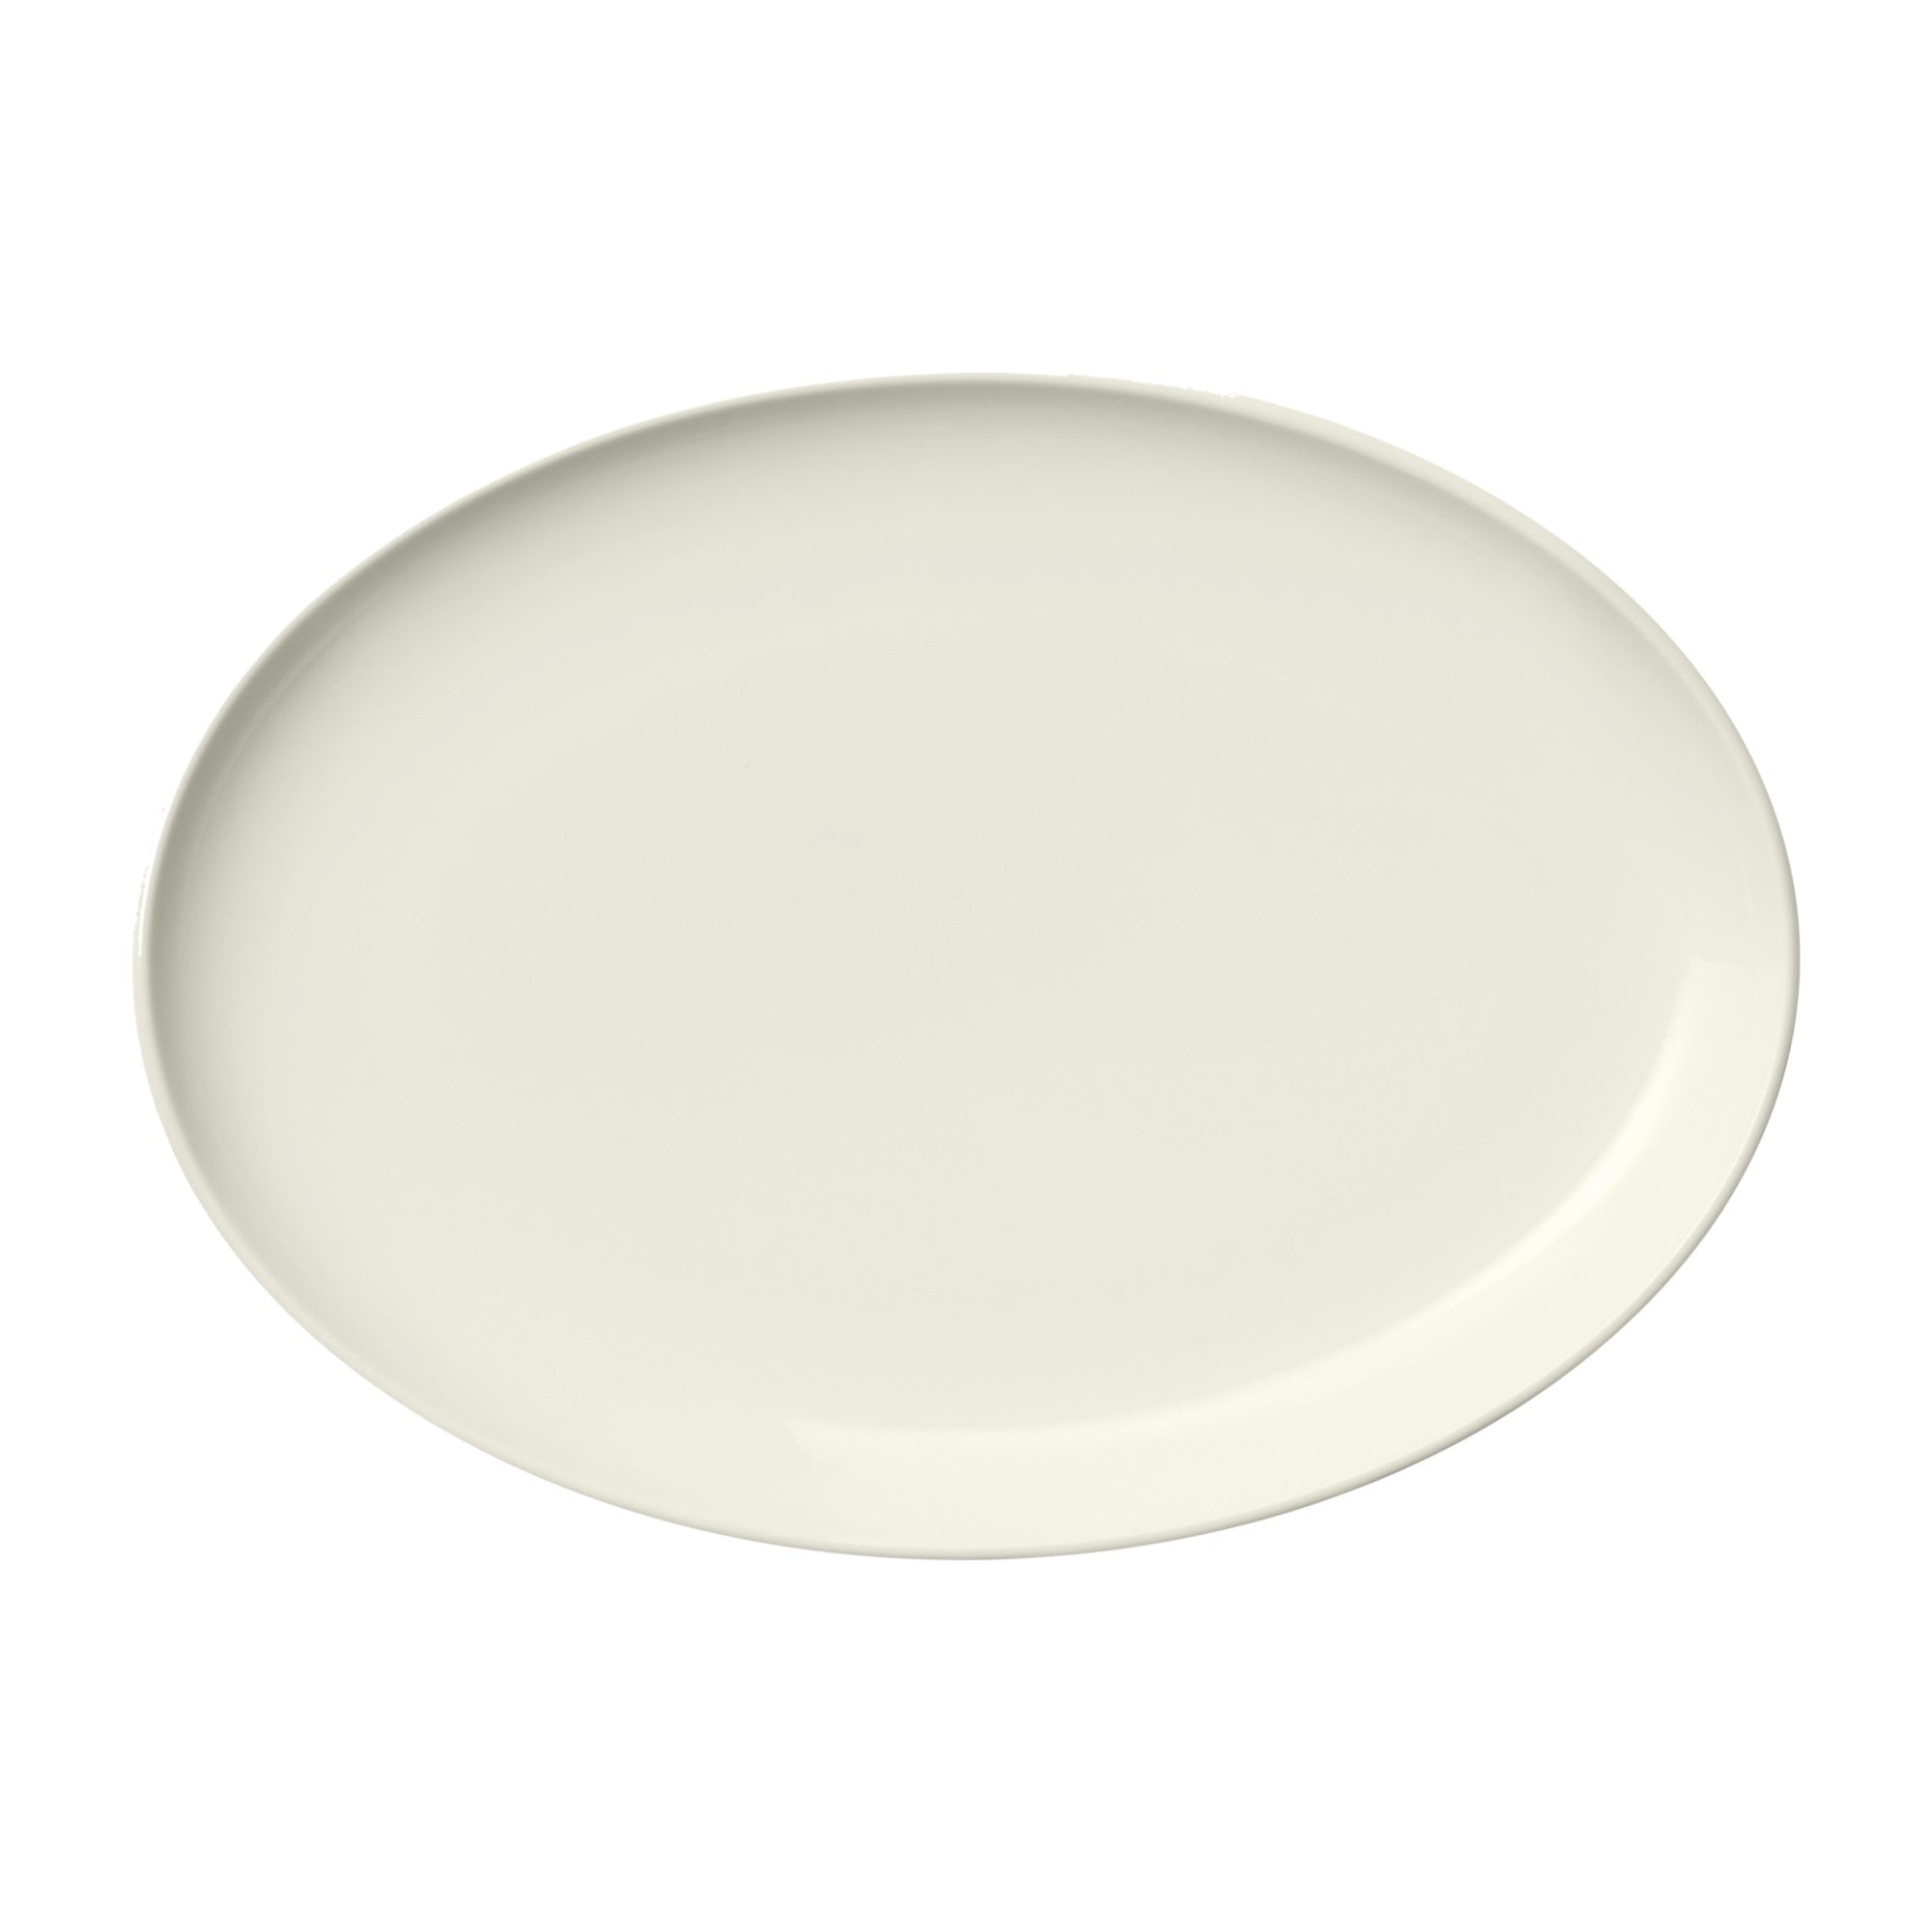 Essence plate oval 25 cm / 10"